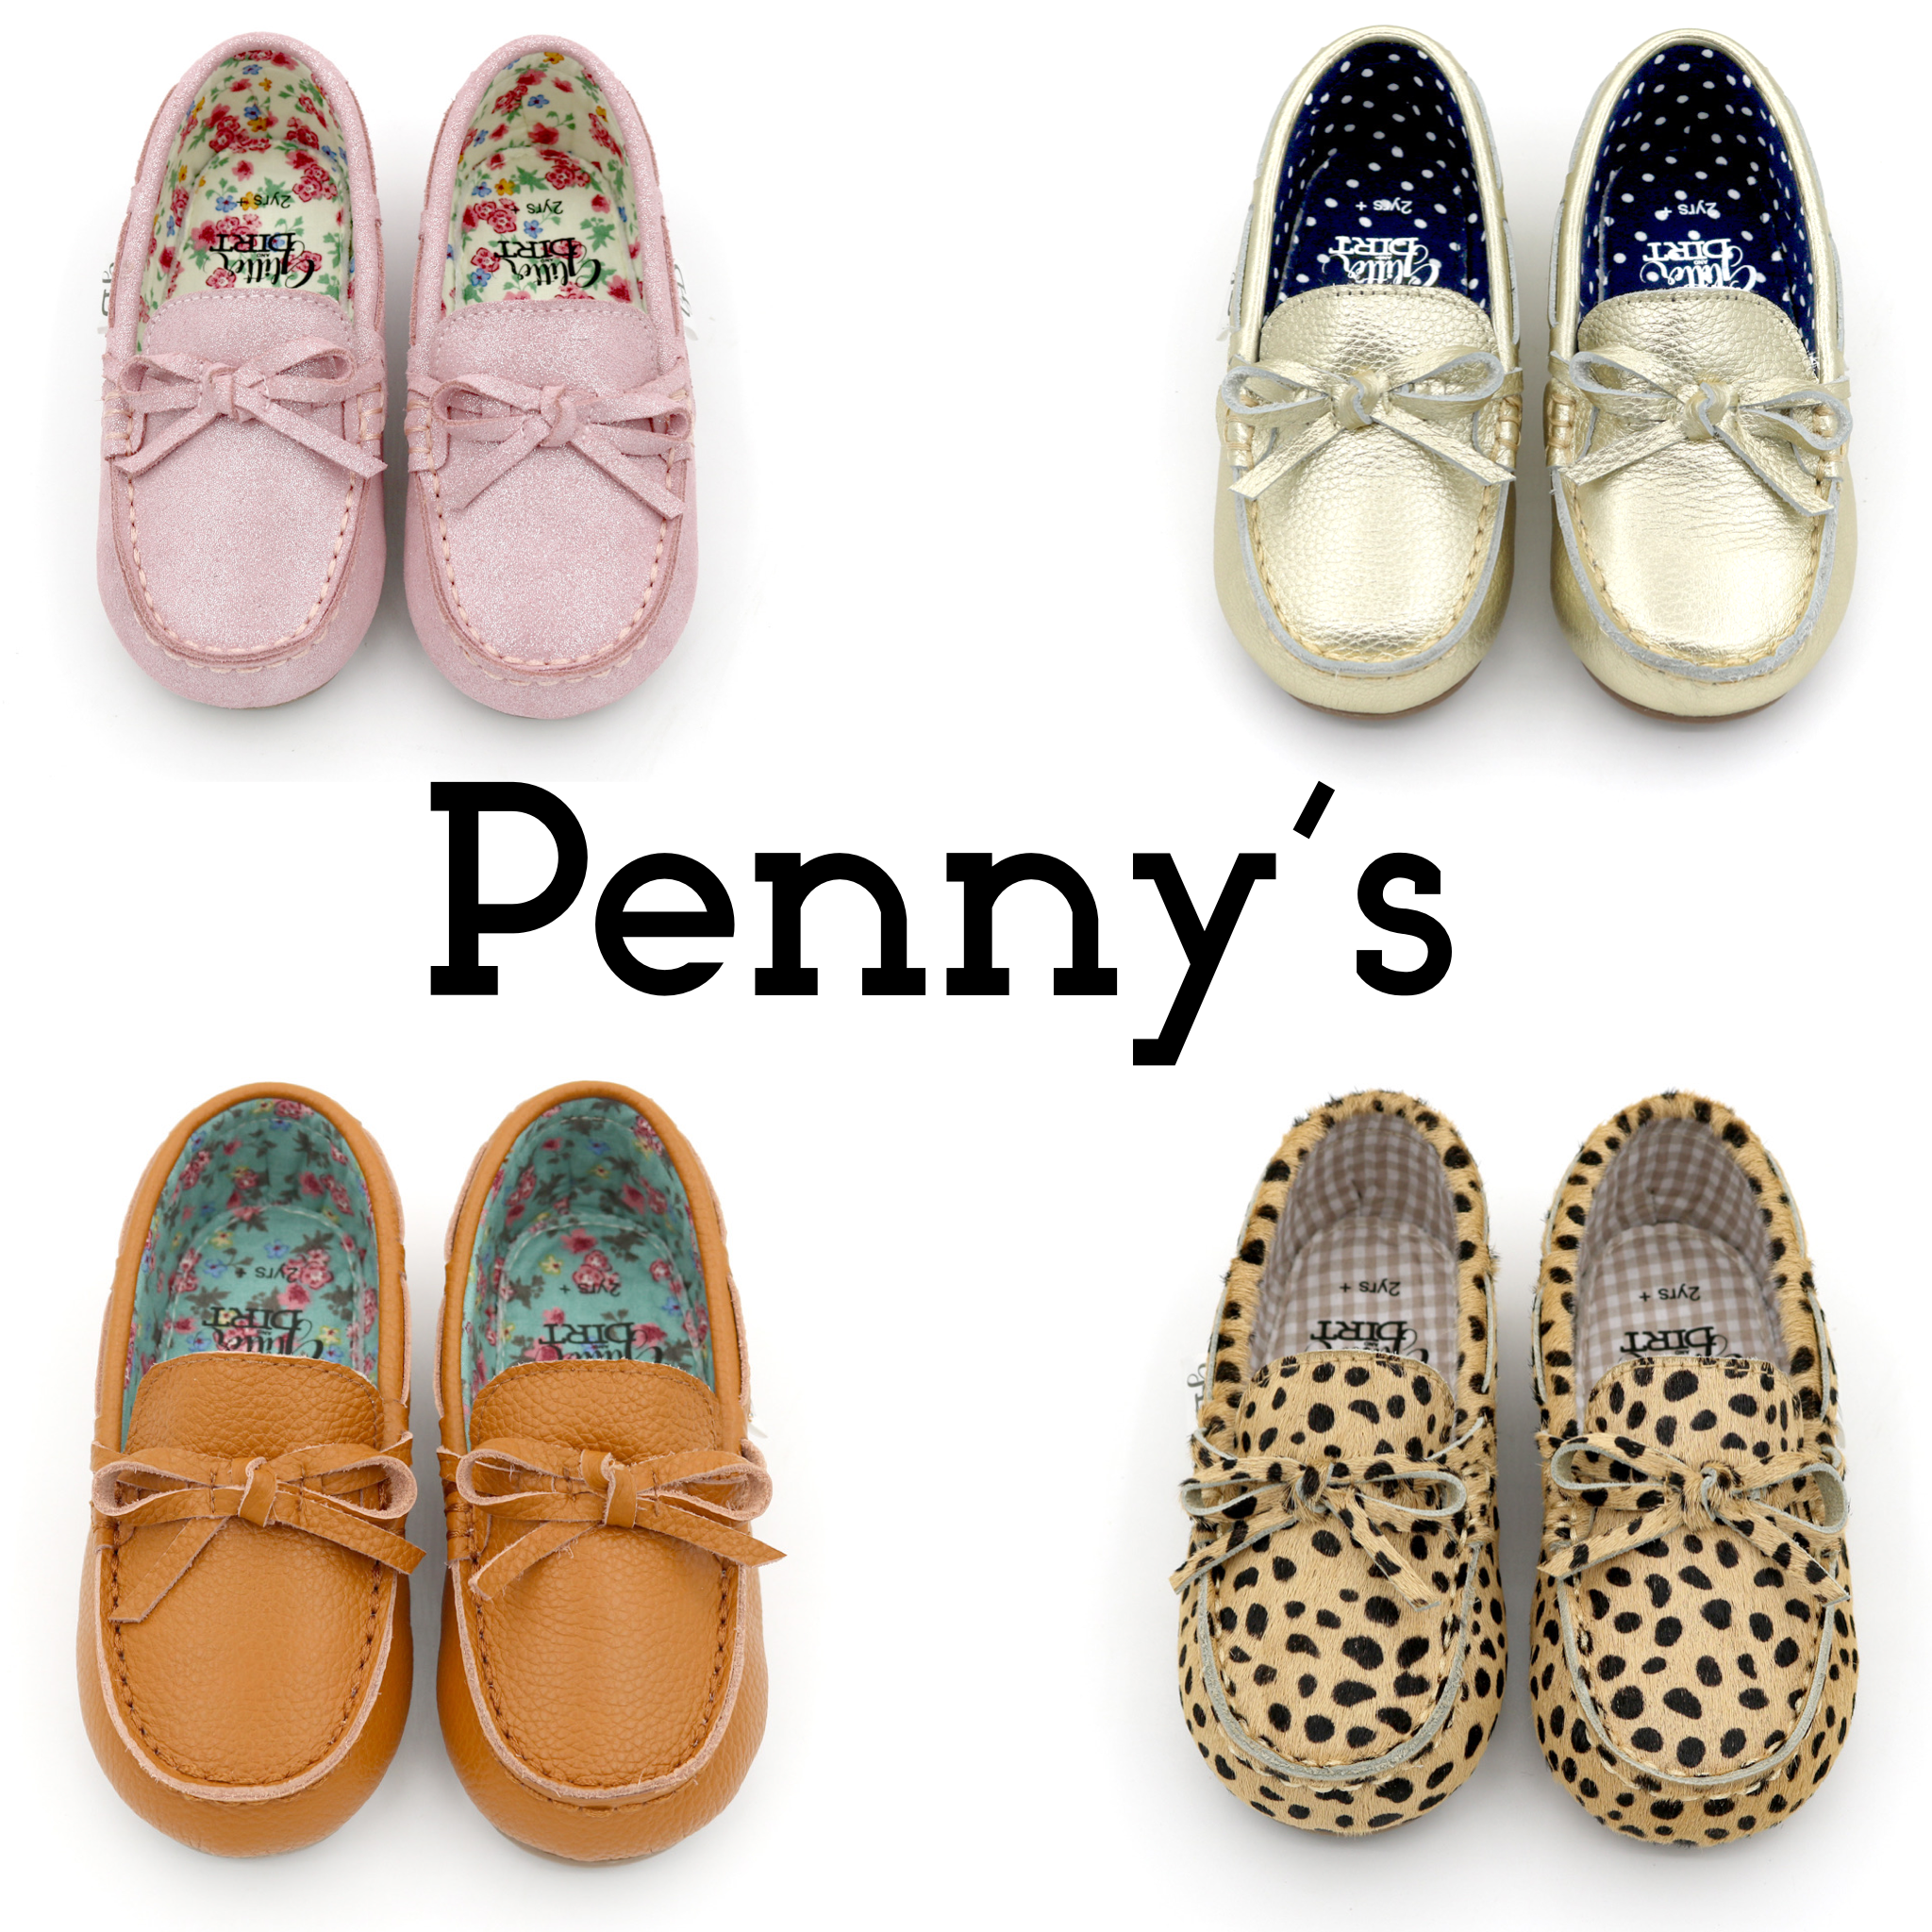 Penny’s